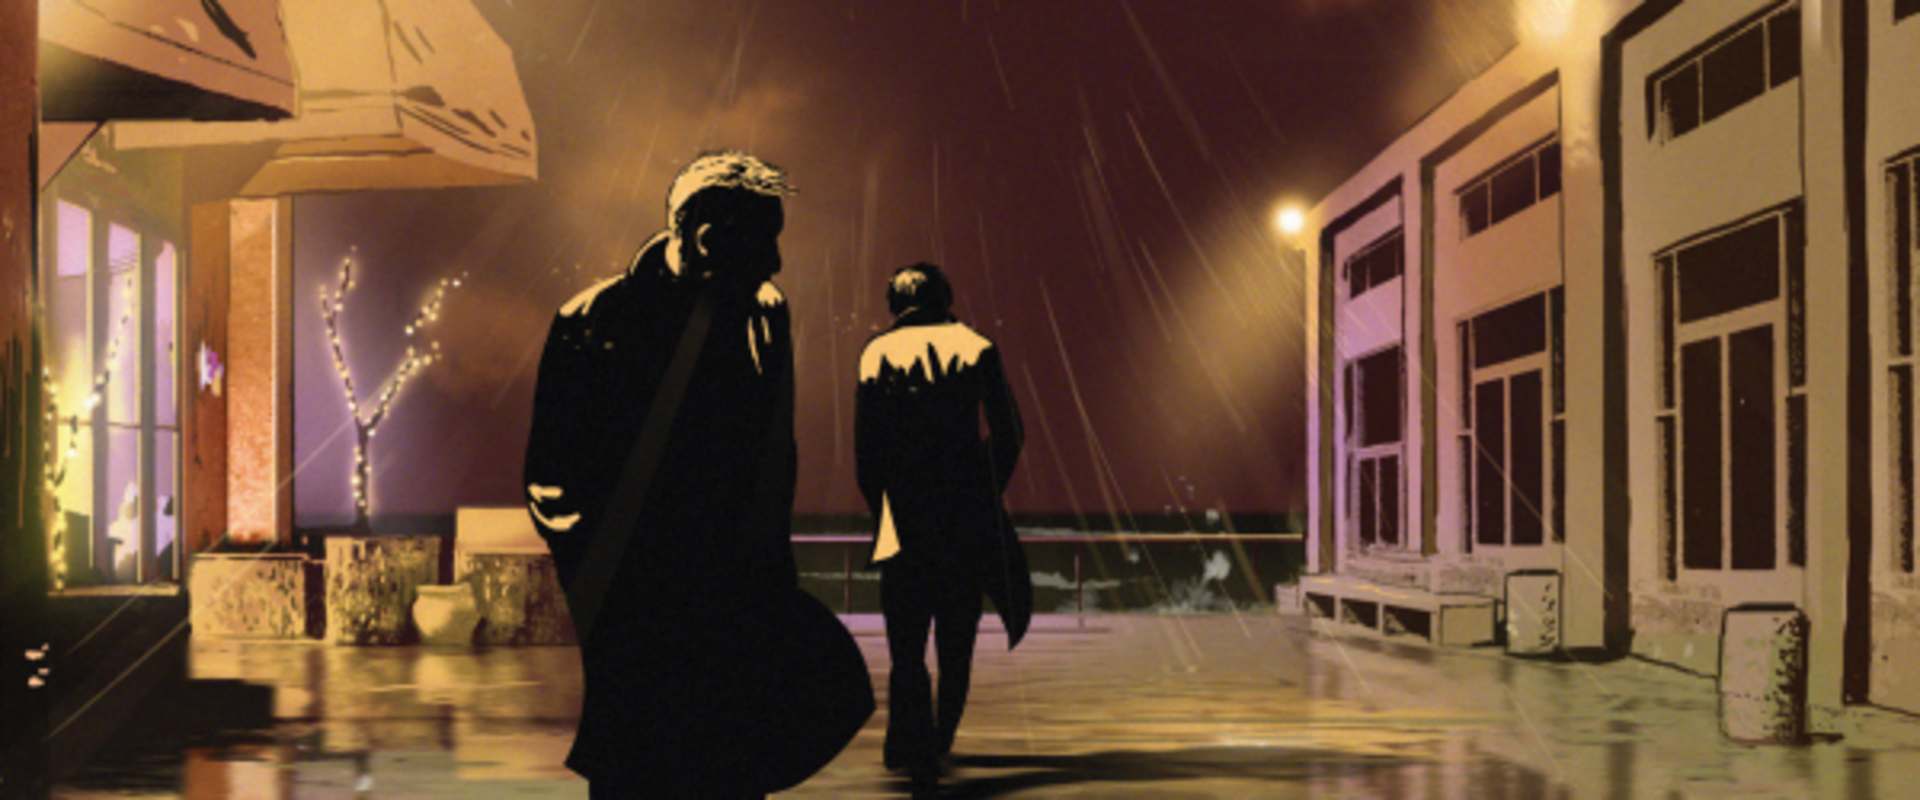 Waltz with Bashir background 2